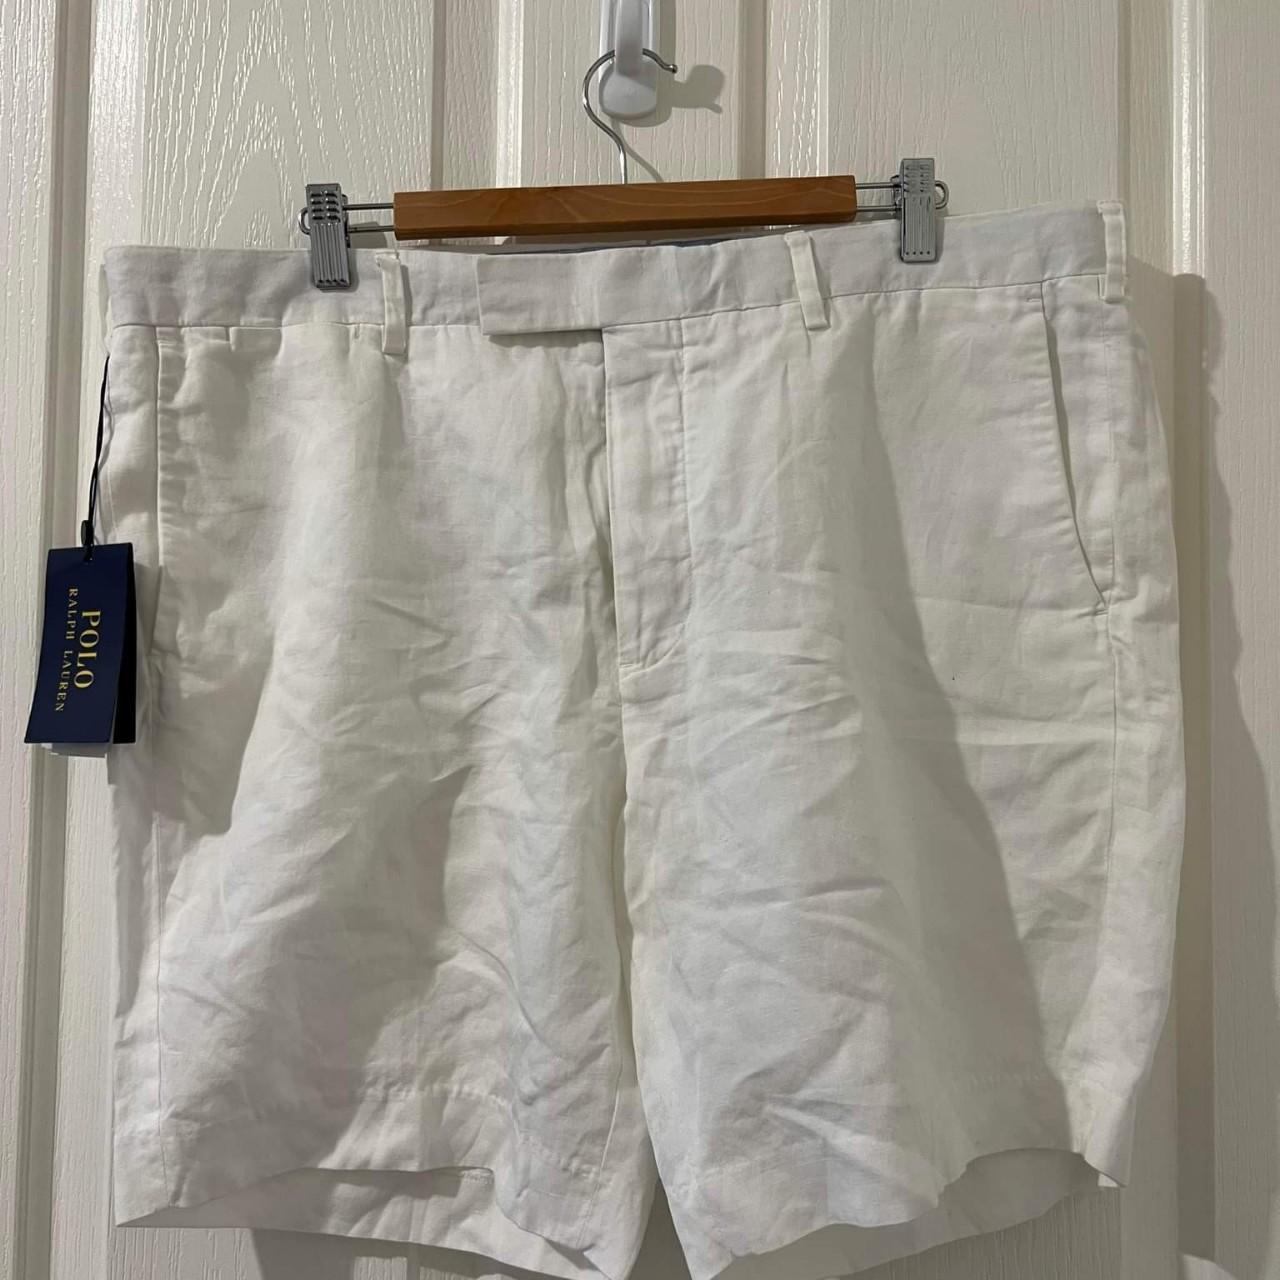 Polo Ralph Lauren White Chino Shorts, Tag Still... - Depop